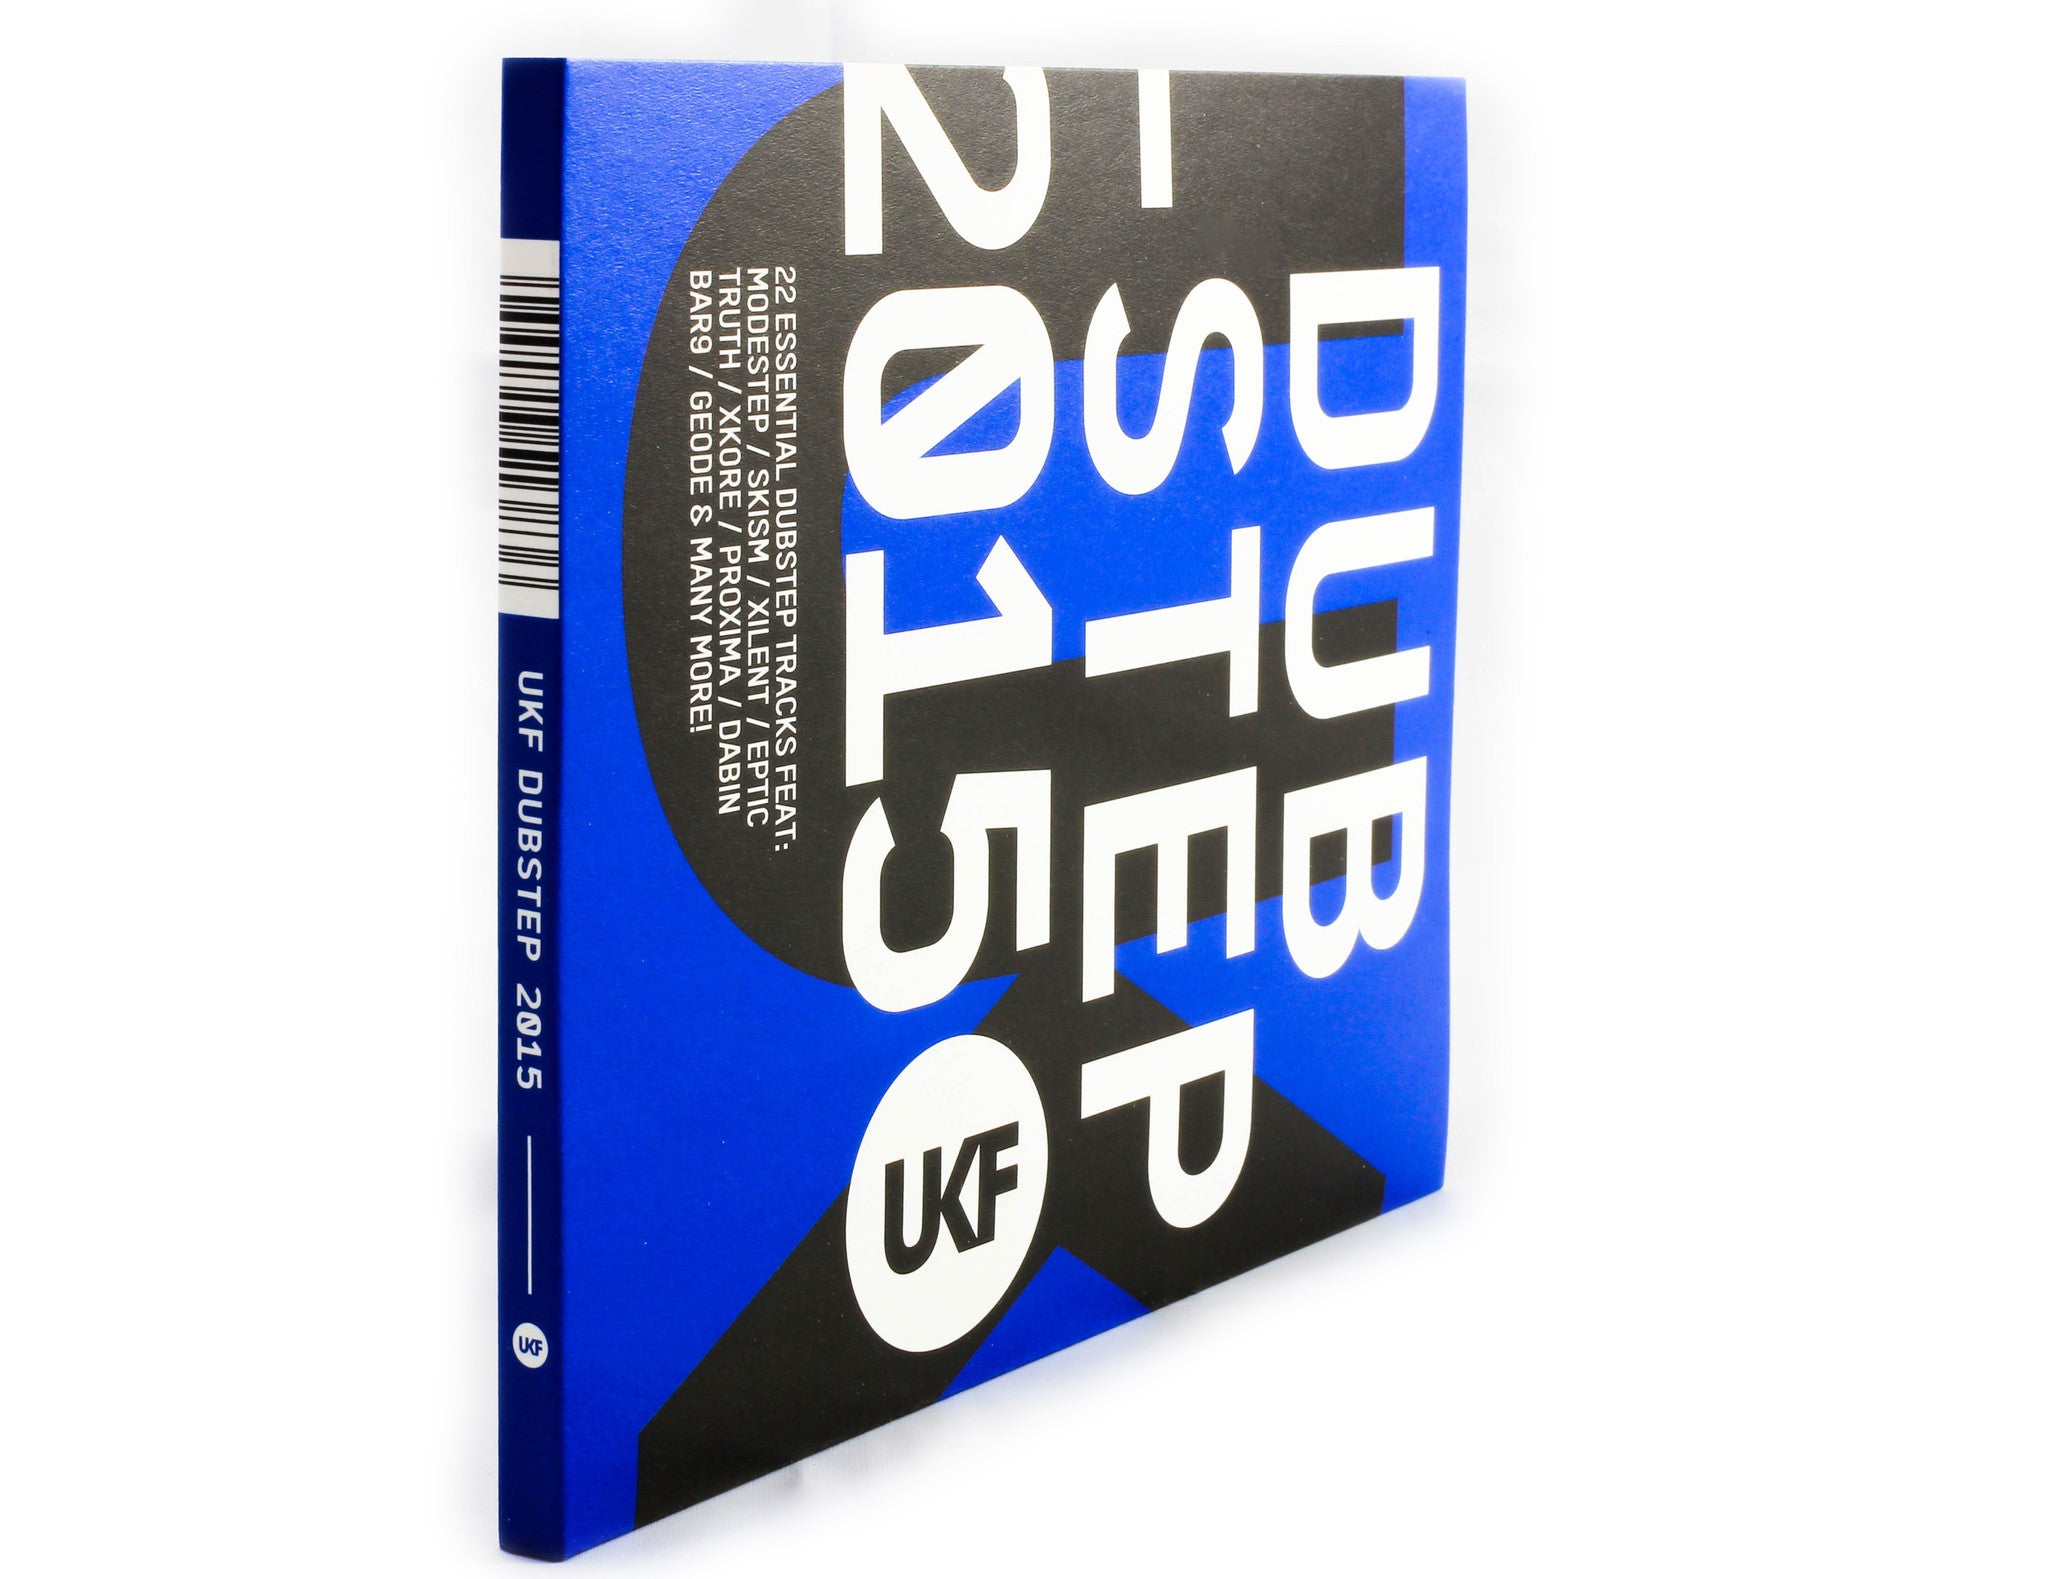 UKF Dubstep 2015 - UKF Music Store